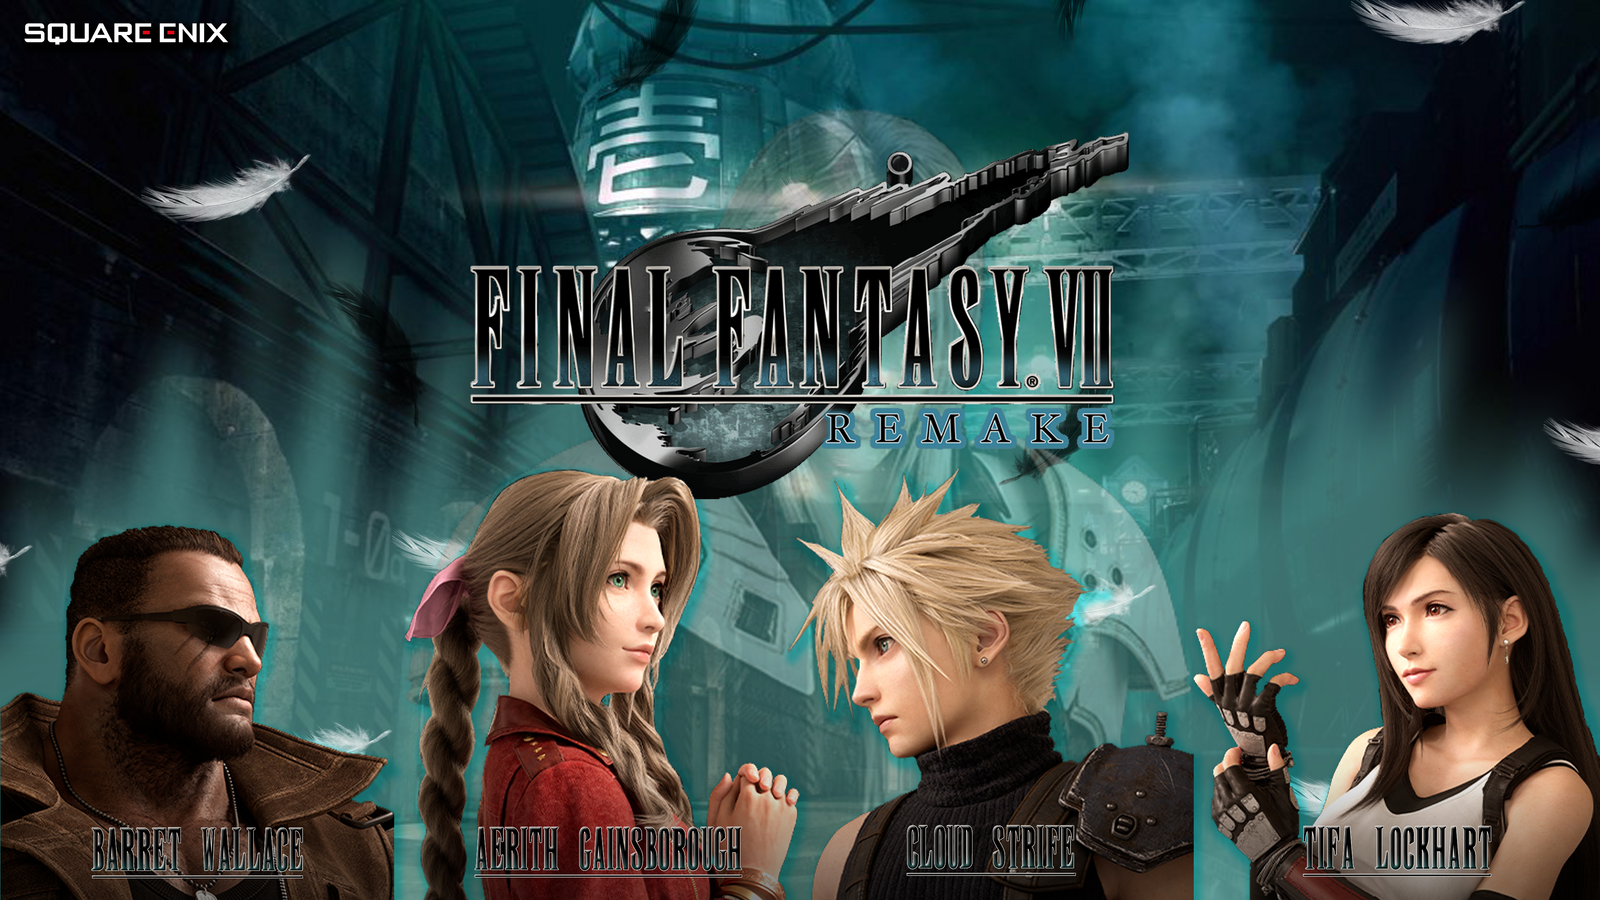 Final Fantasy VII Remake Wallpapers